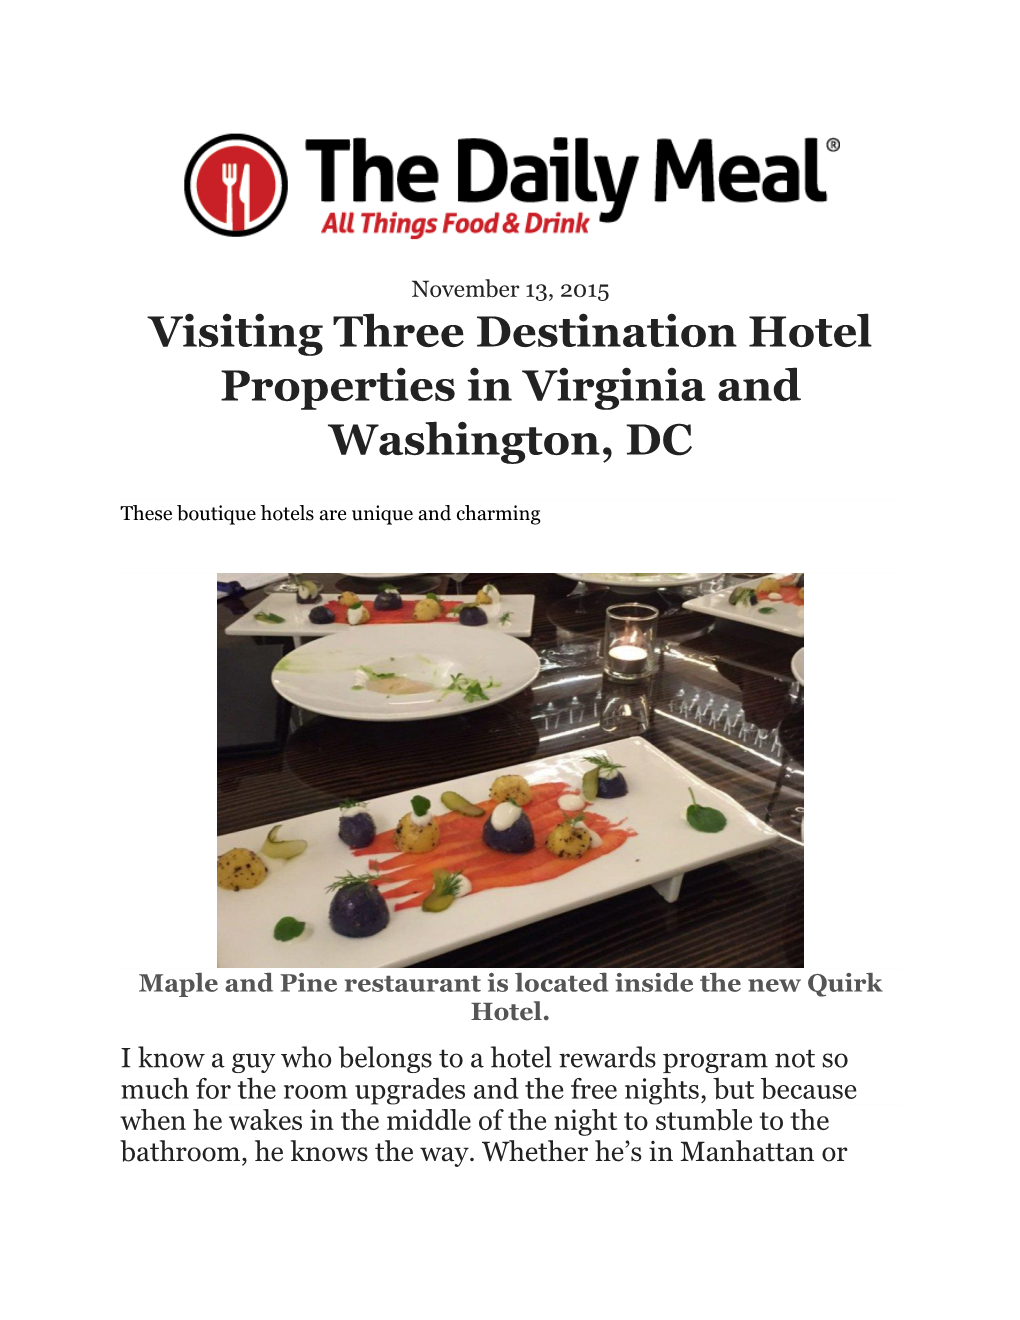 Visiting Three Destination Hotel Properties in Virginia and Washington, DC